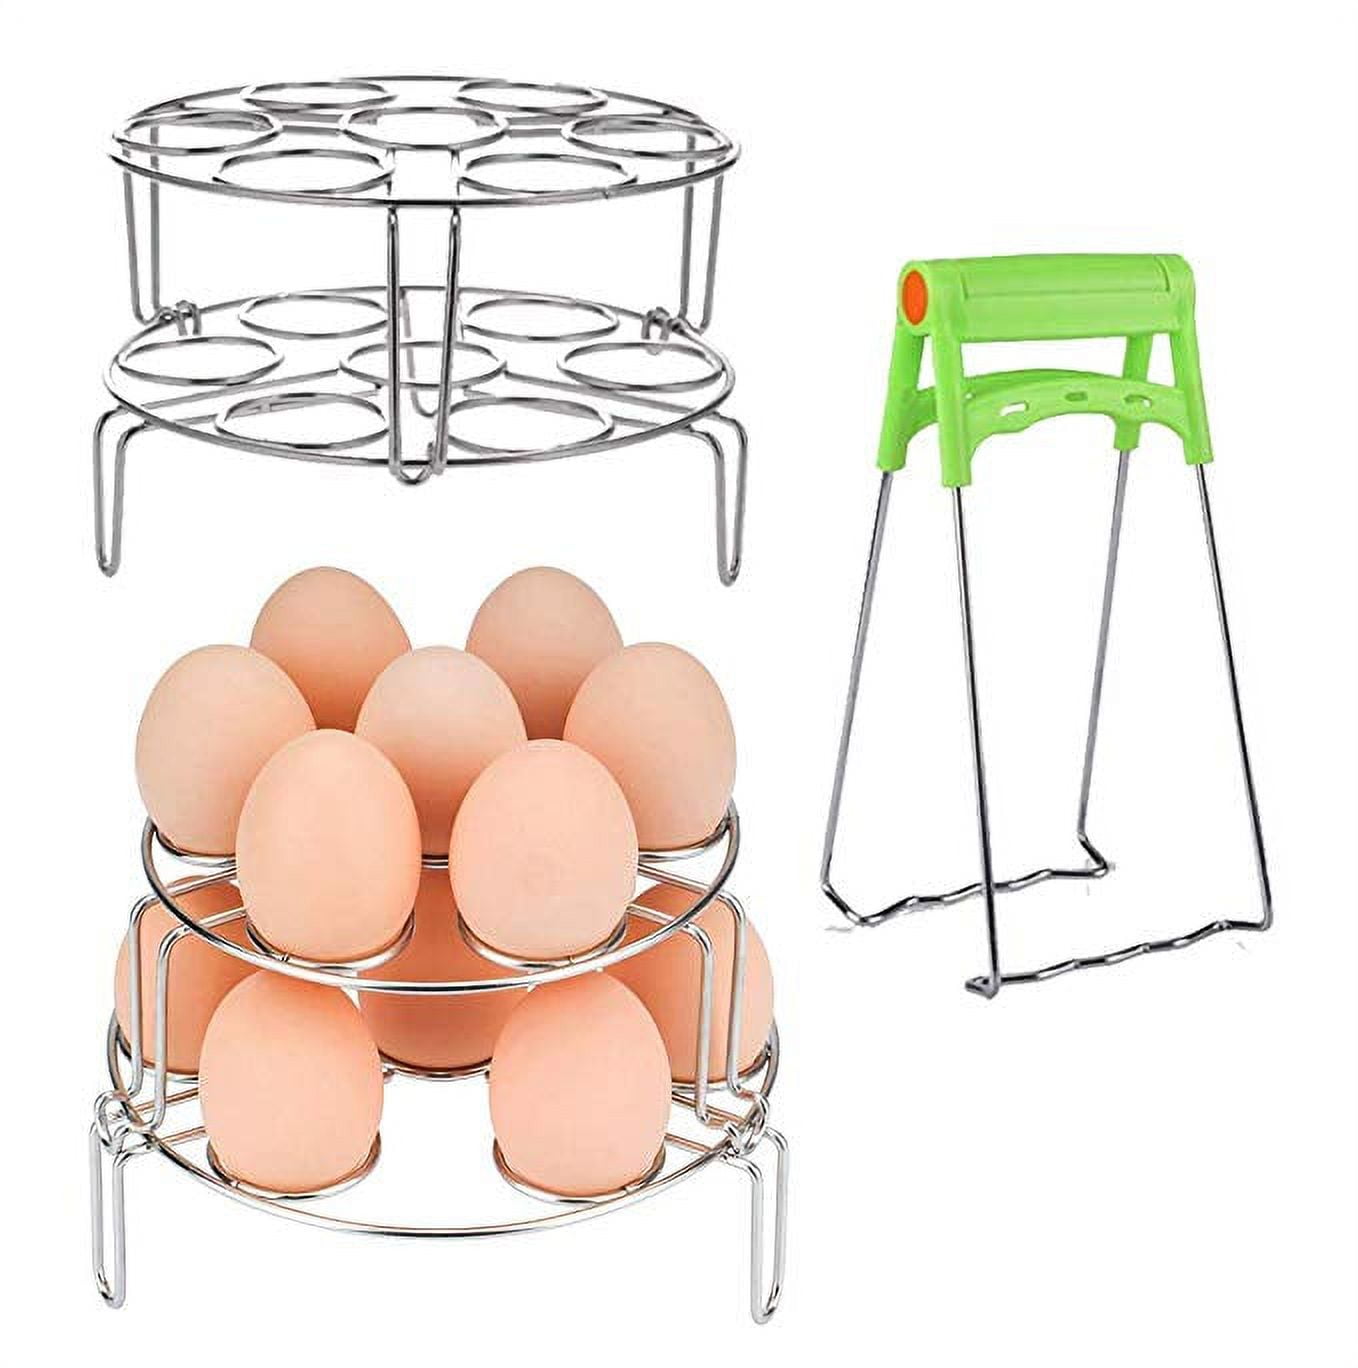 Steamer Stainless Steel Basket Instant Pot Egg Steamer Rack Set Kitchen  Dining Instant Pot Accessories Kitchen